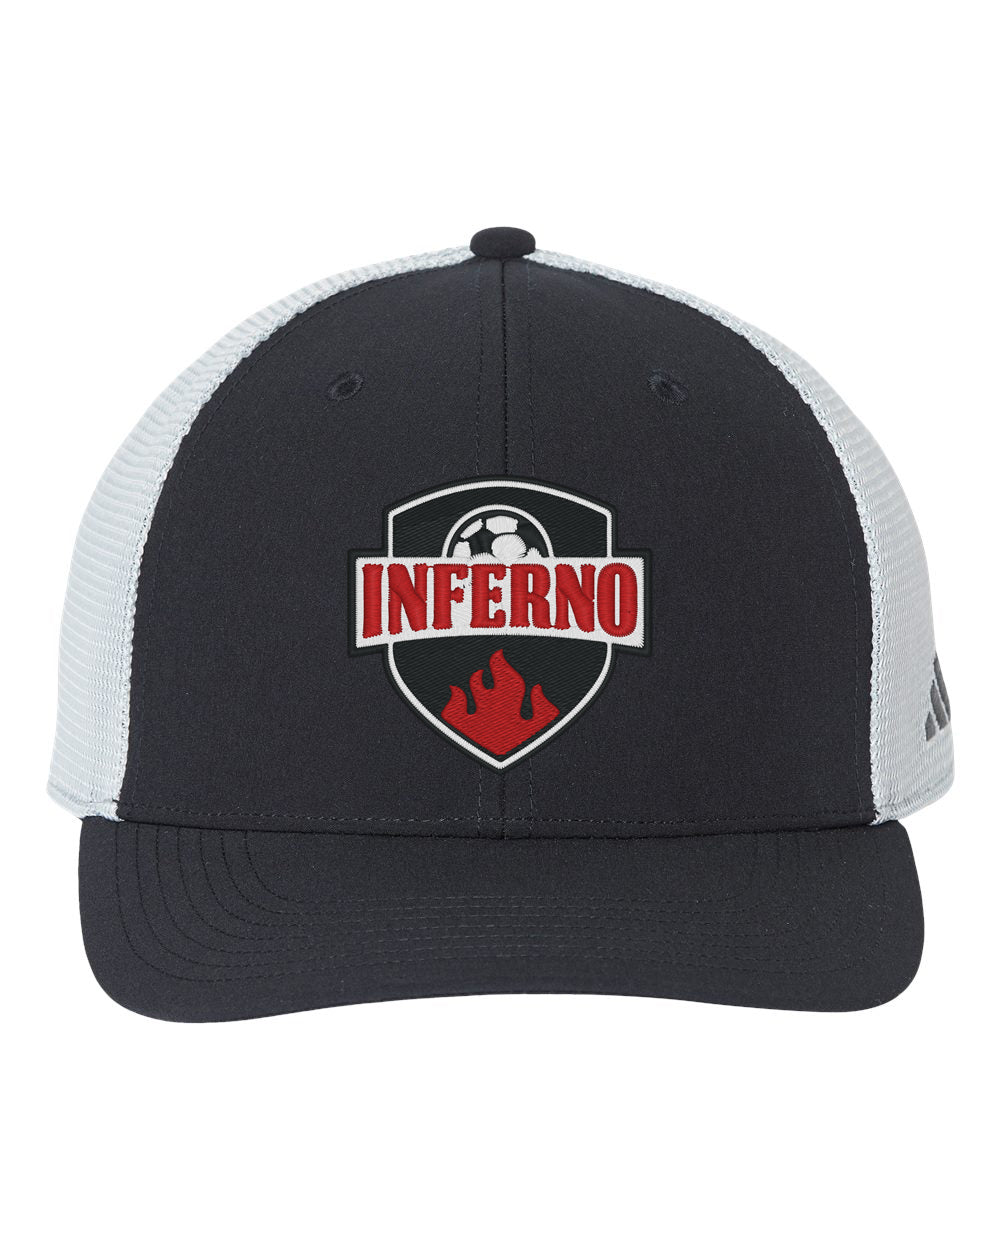 Inferno Adidas Trucker Cap